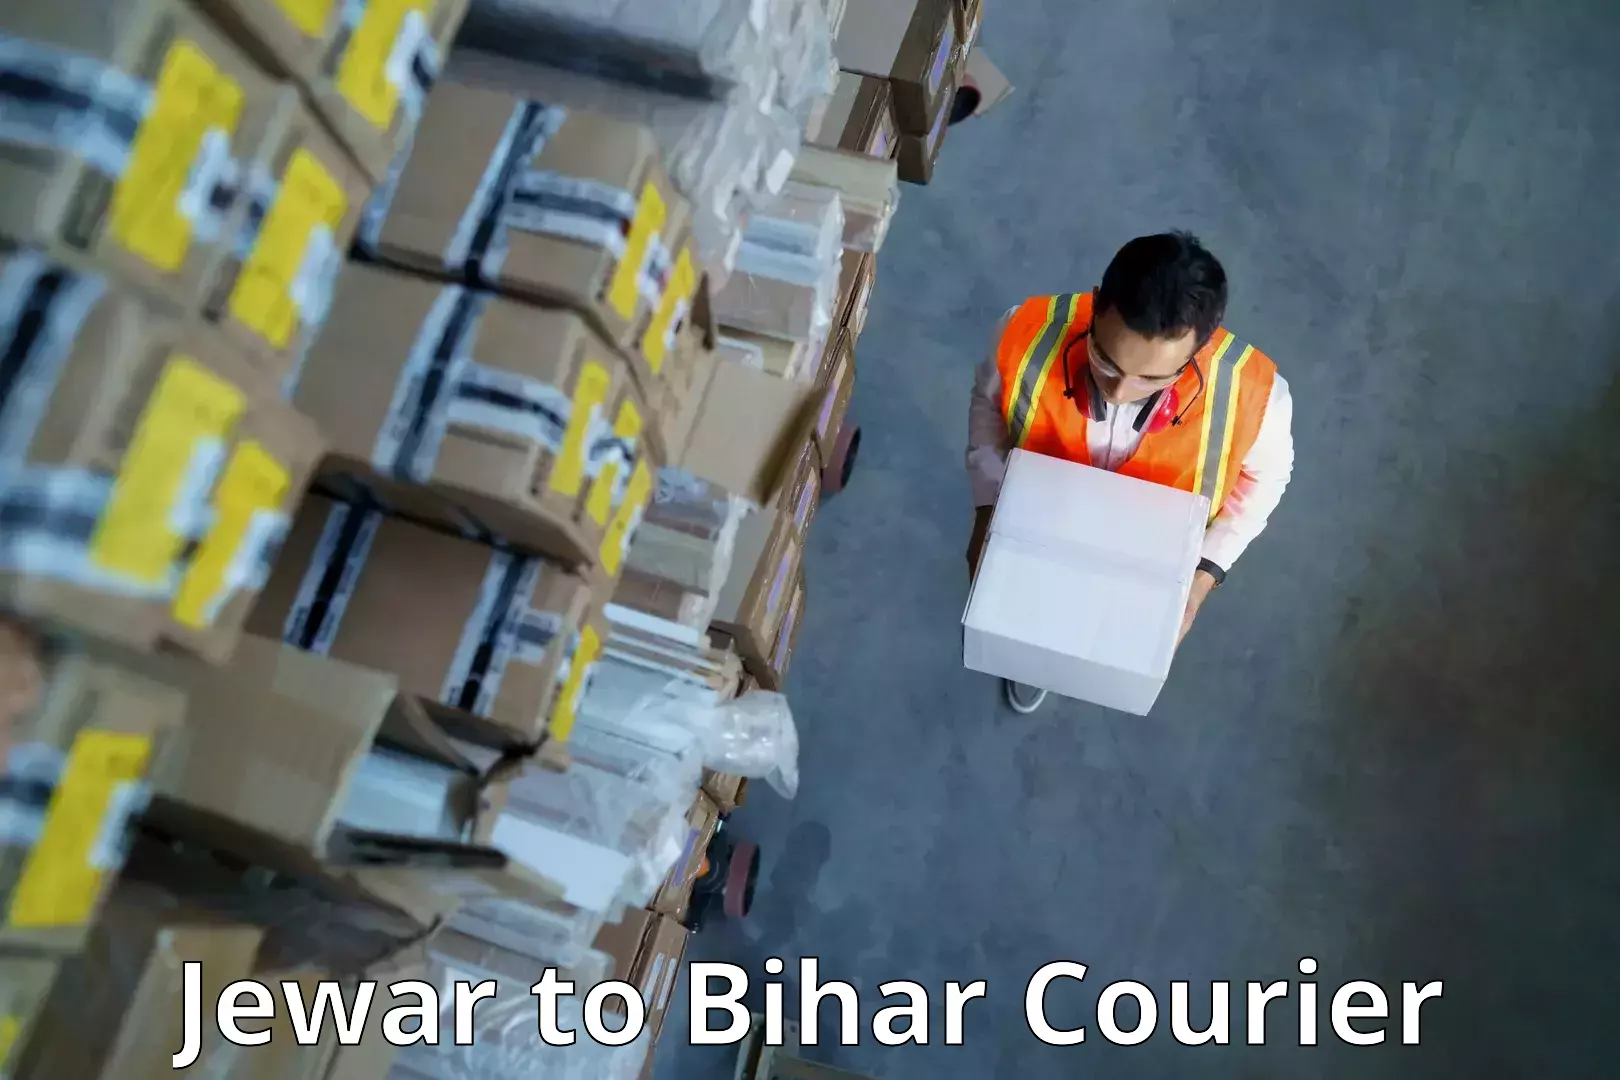 Courier service partnerships Jewar to Bihar